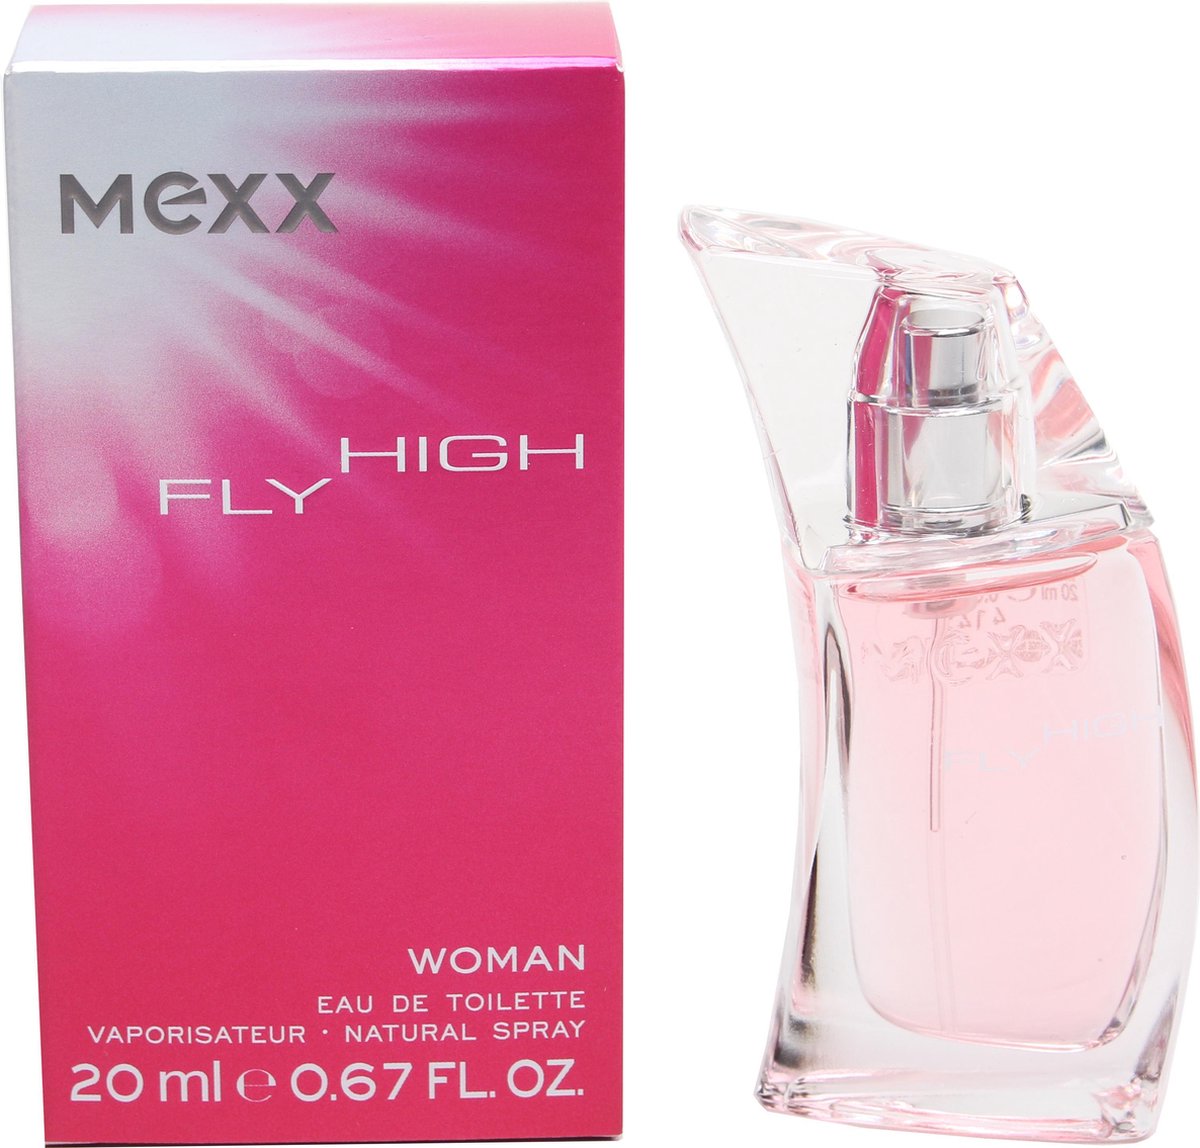 Fly туалетная вода. Mexx Fly High 60 ml. Мехх туалетная вода женская Fly. Mexx Fly woman розовые. Духи мехх Fly High женские.